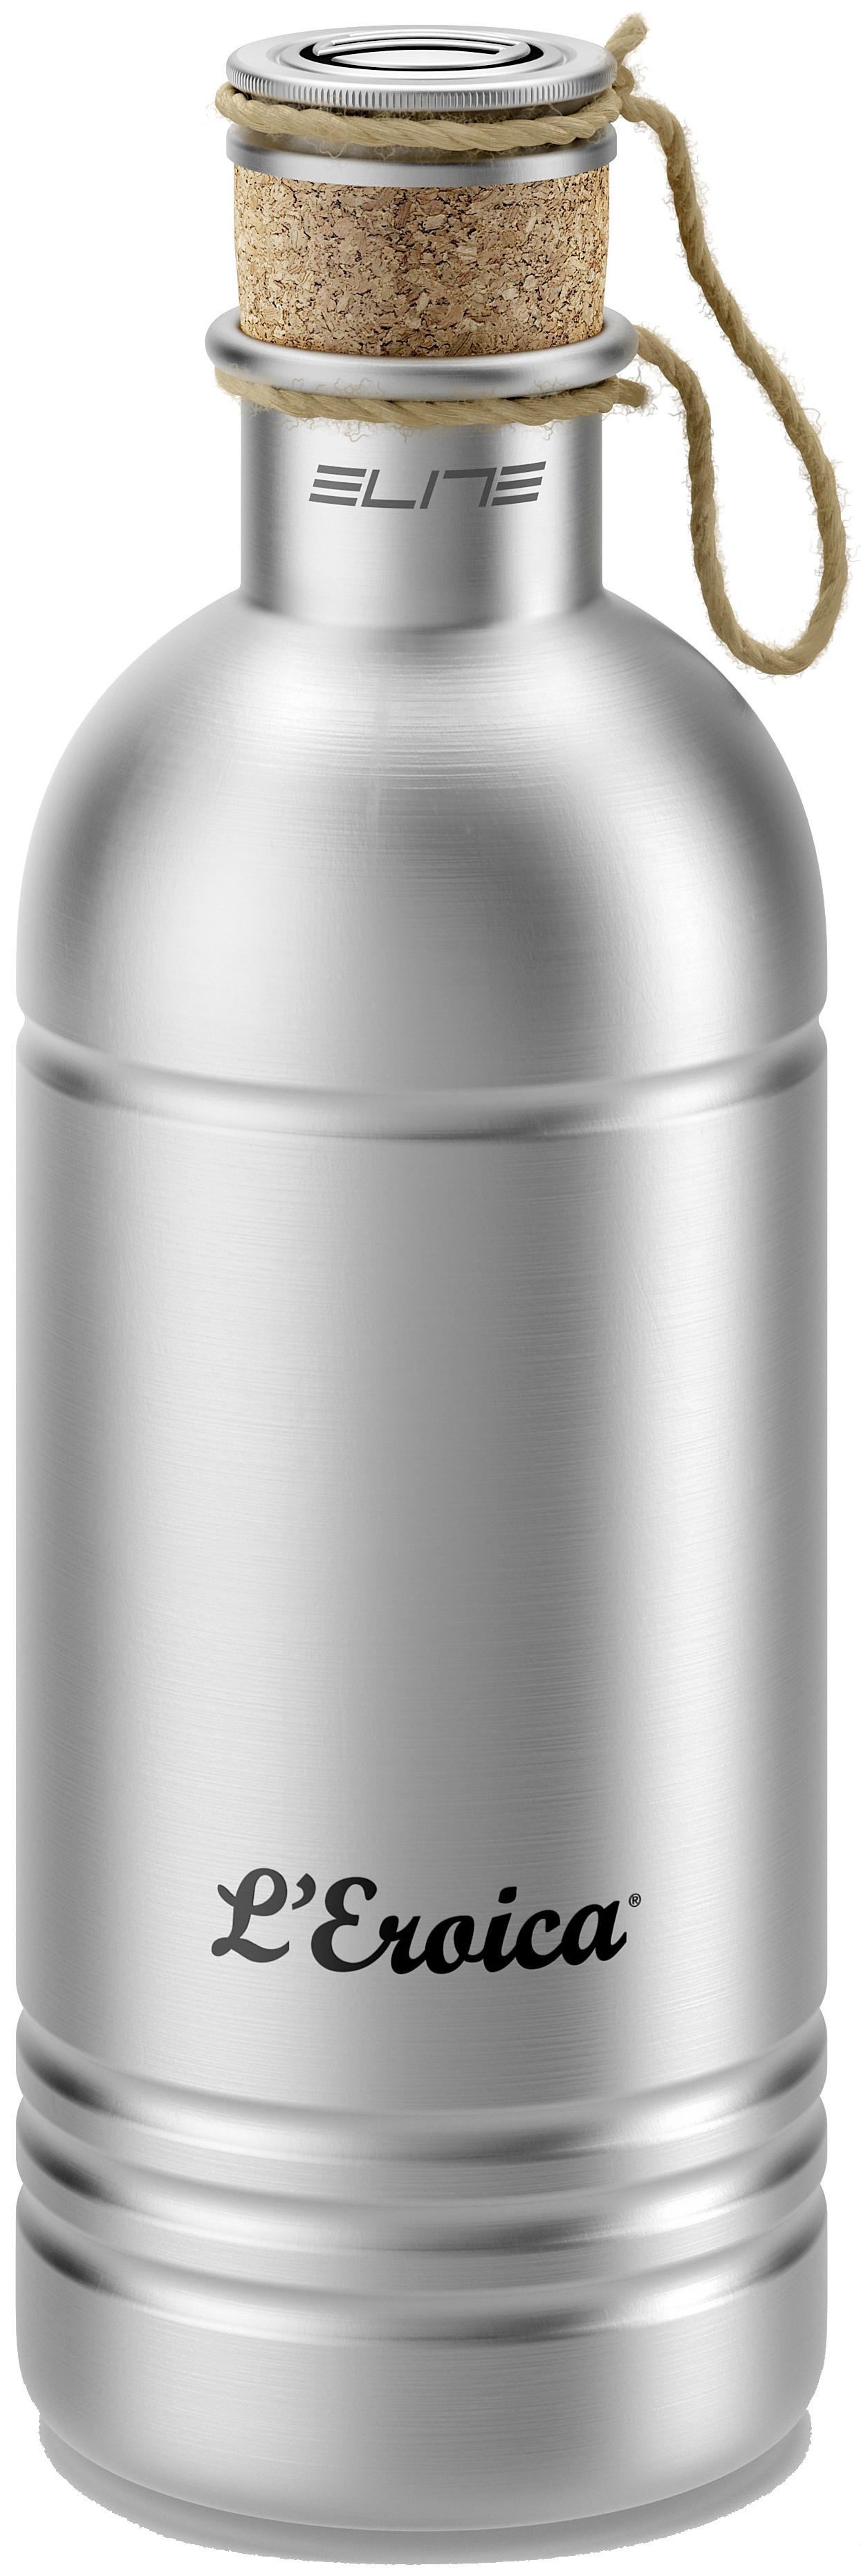 Eroica Aluminium Bottle With Cork Stopper 600 Ml